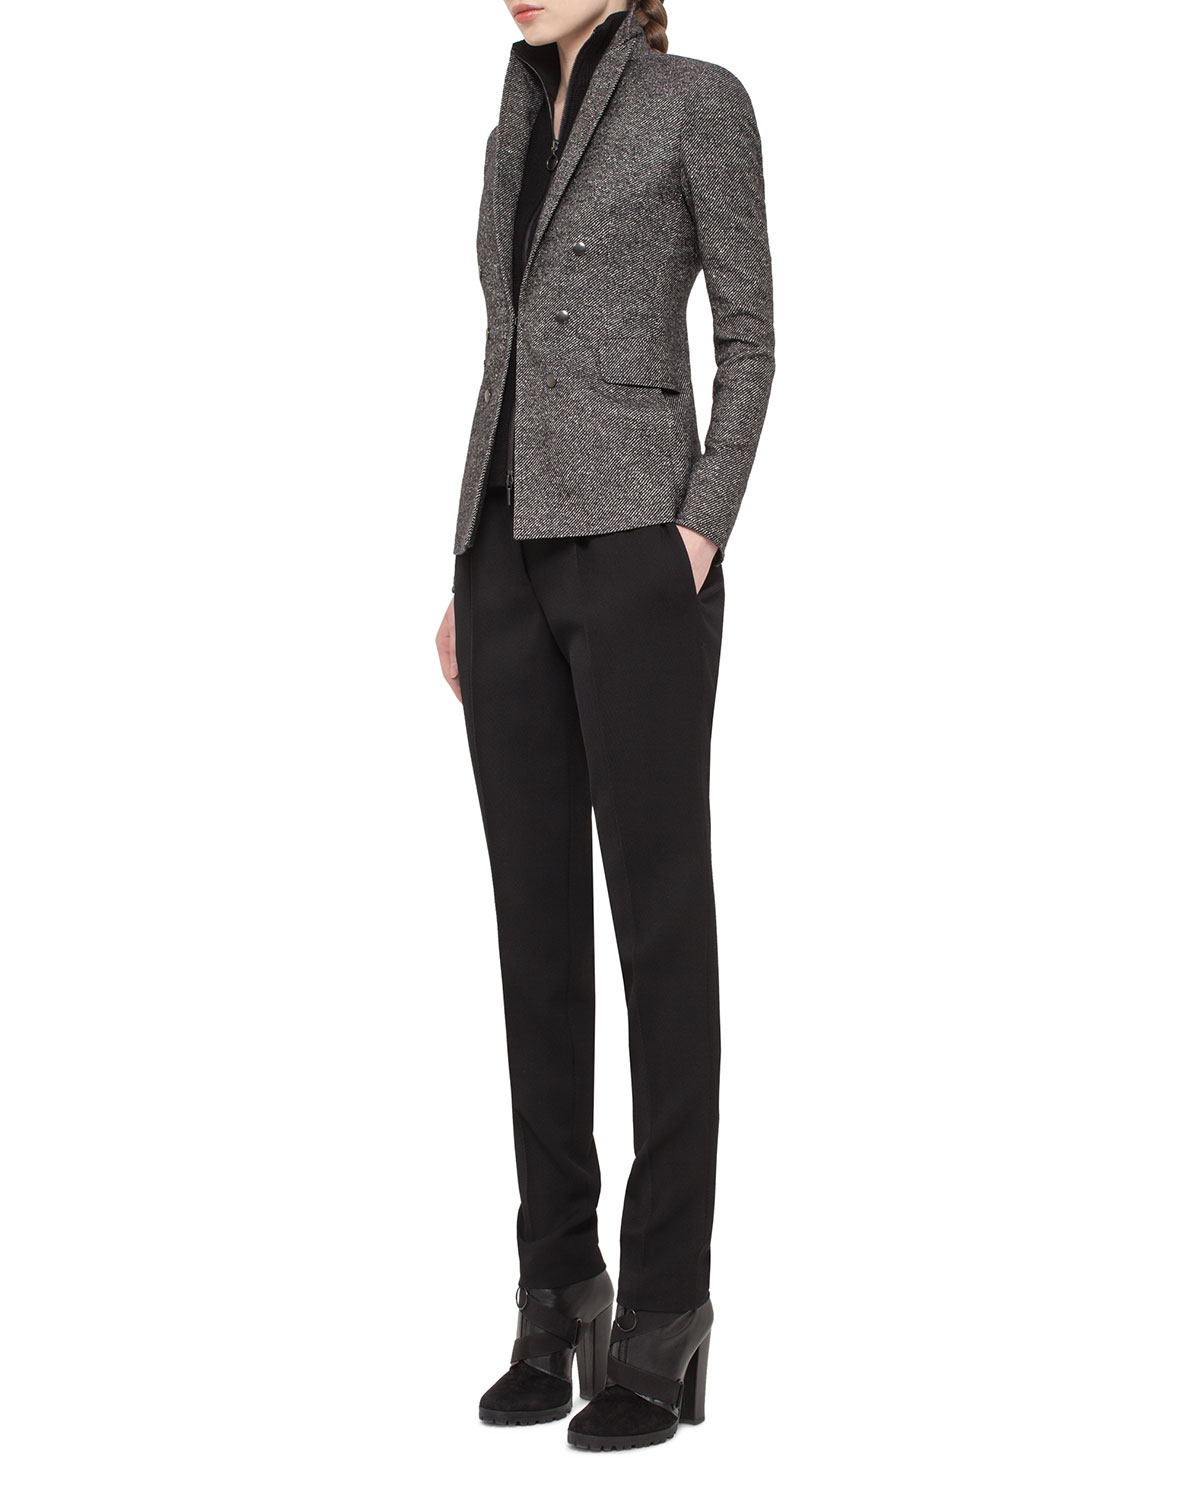 Tweed Hook-Front Jacket, Black/Cream